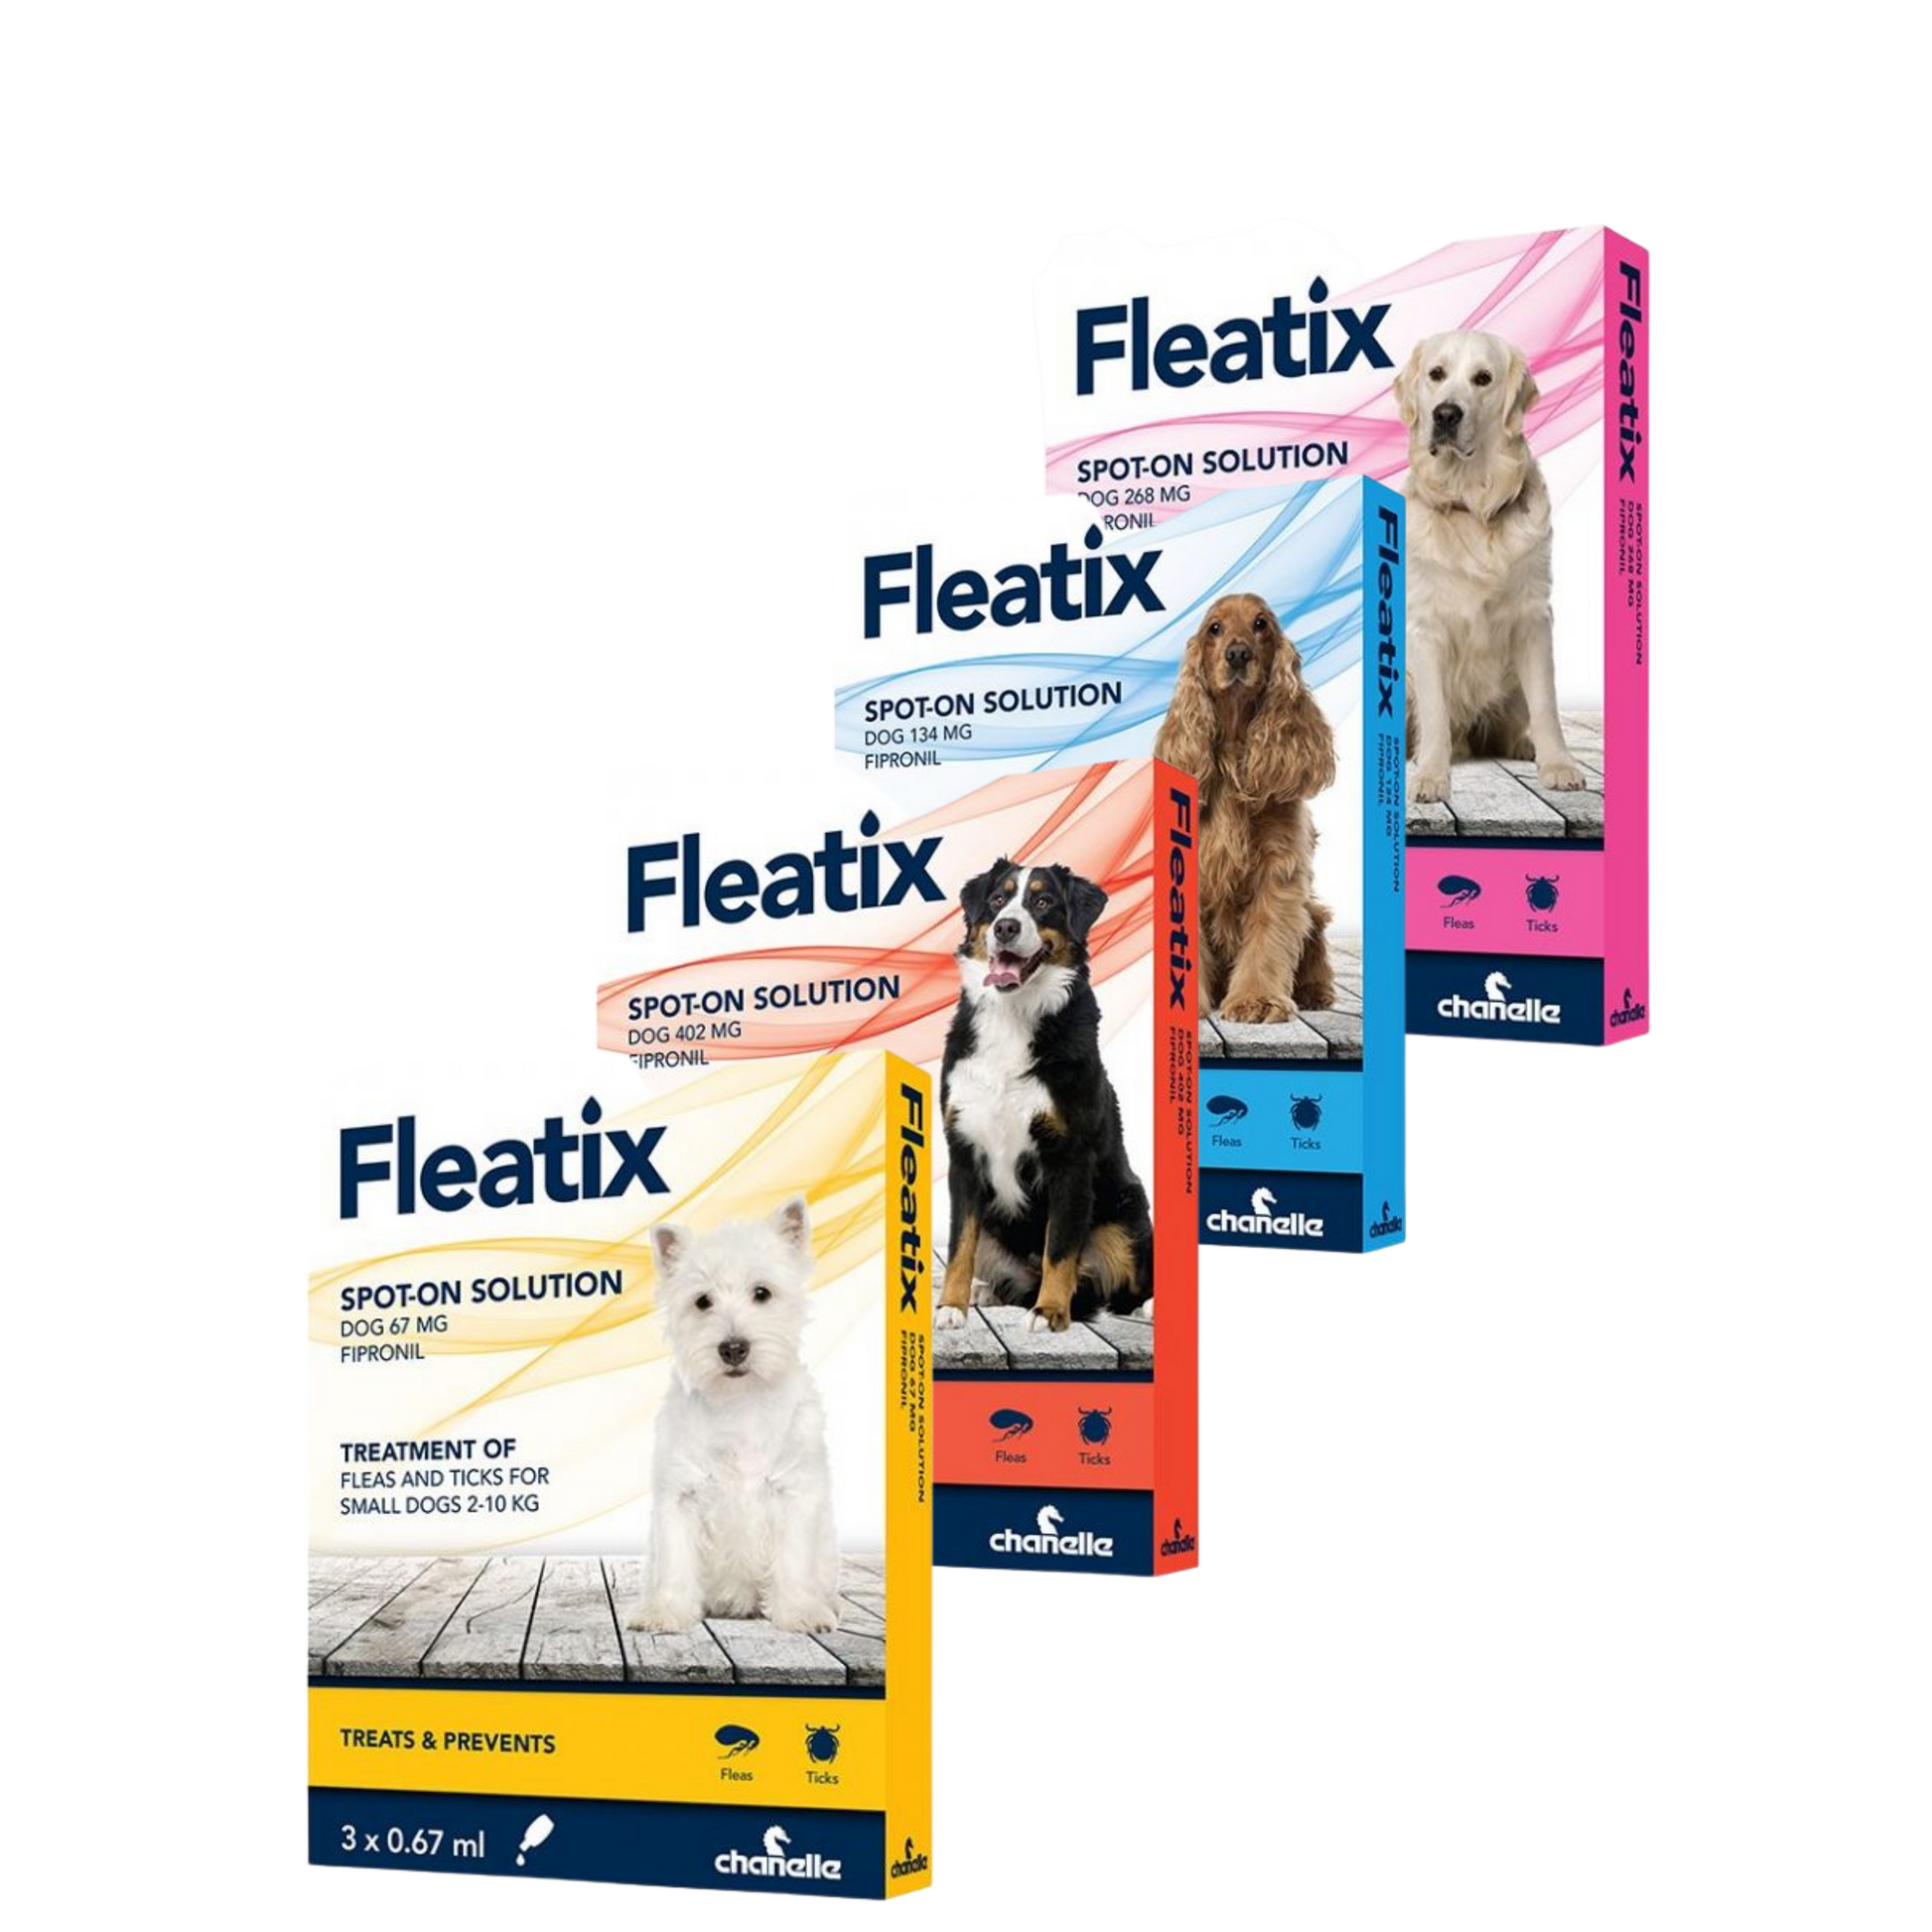 Fleatix Spot-on Solution